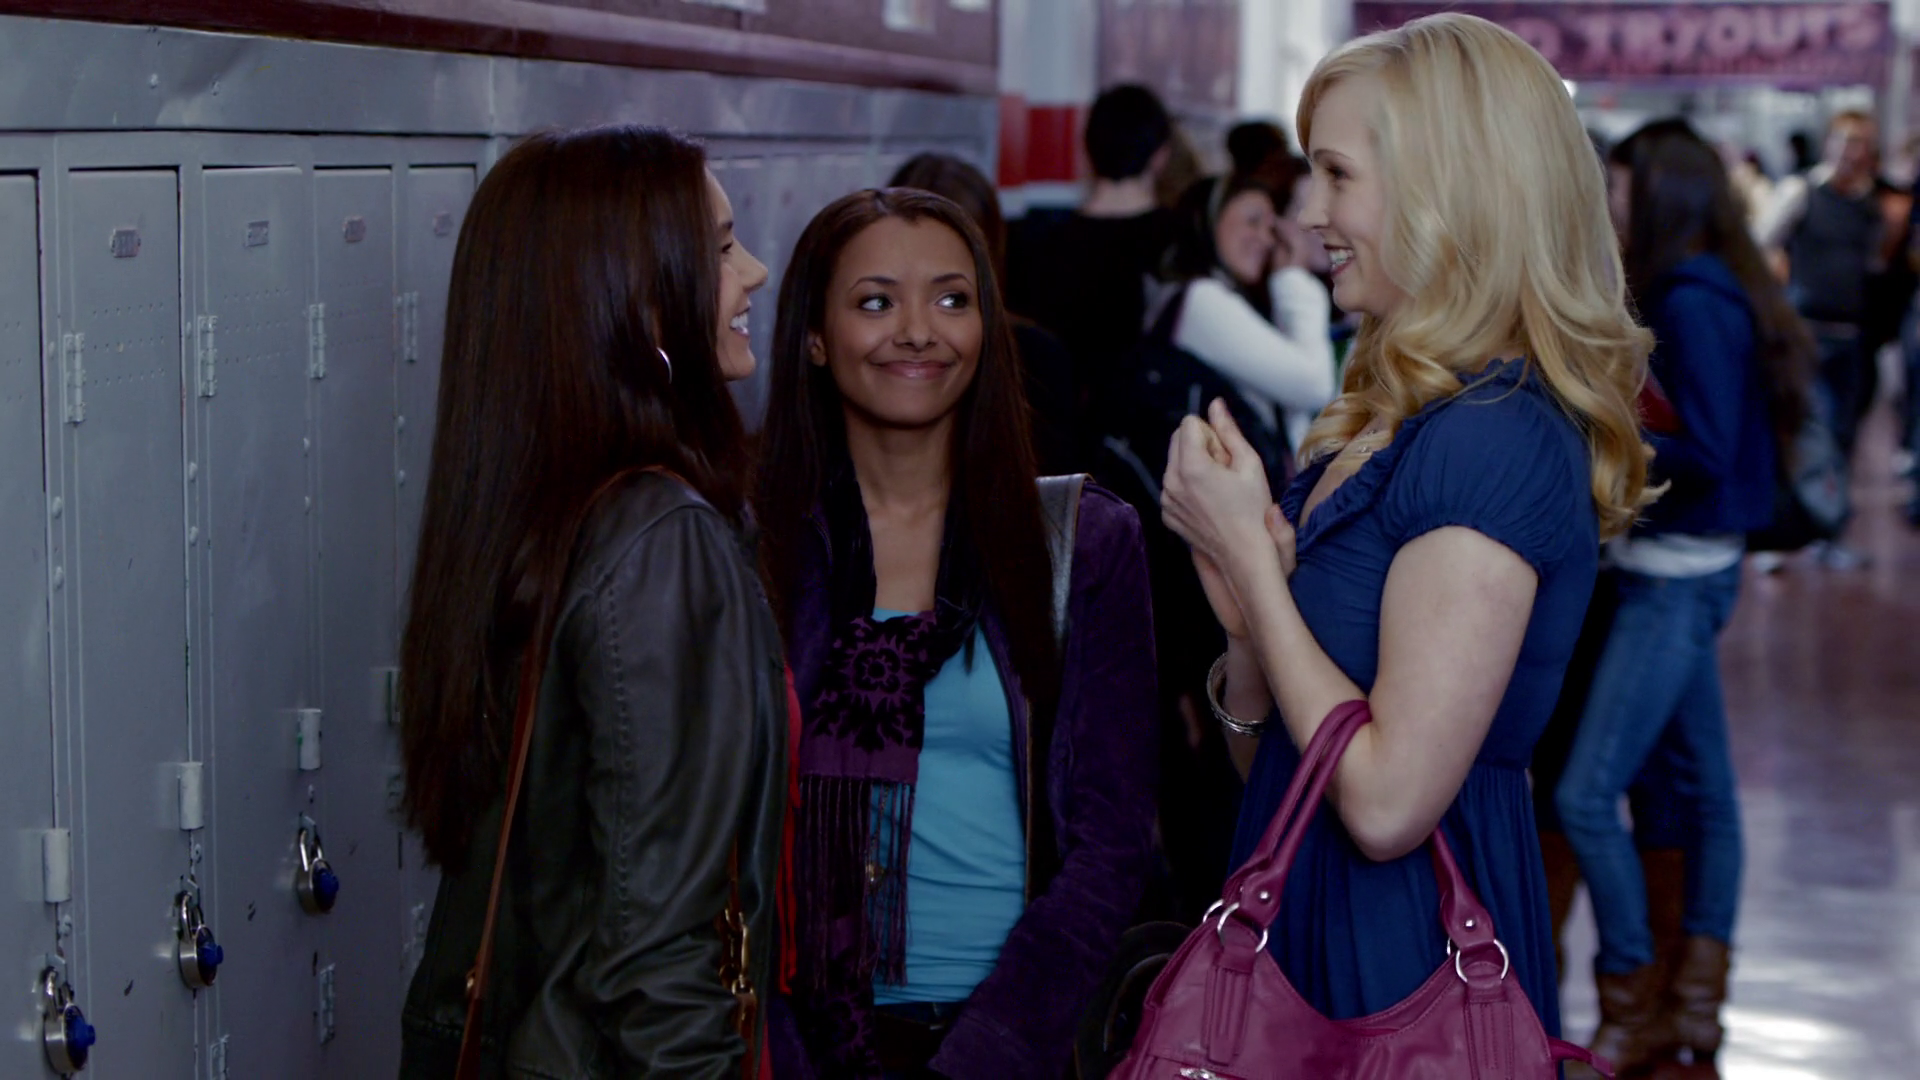 Elena, Bonnie, and Carolina gossiping outside their lockers